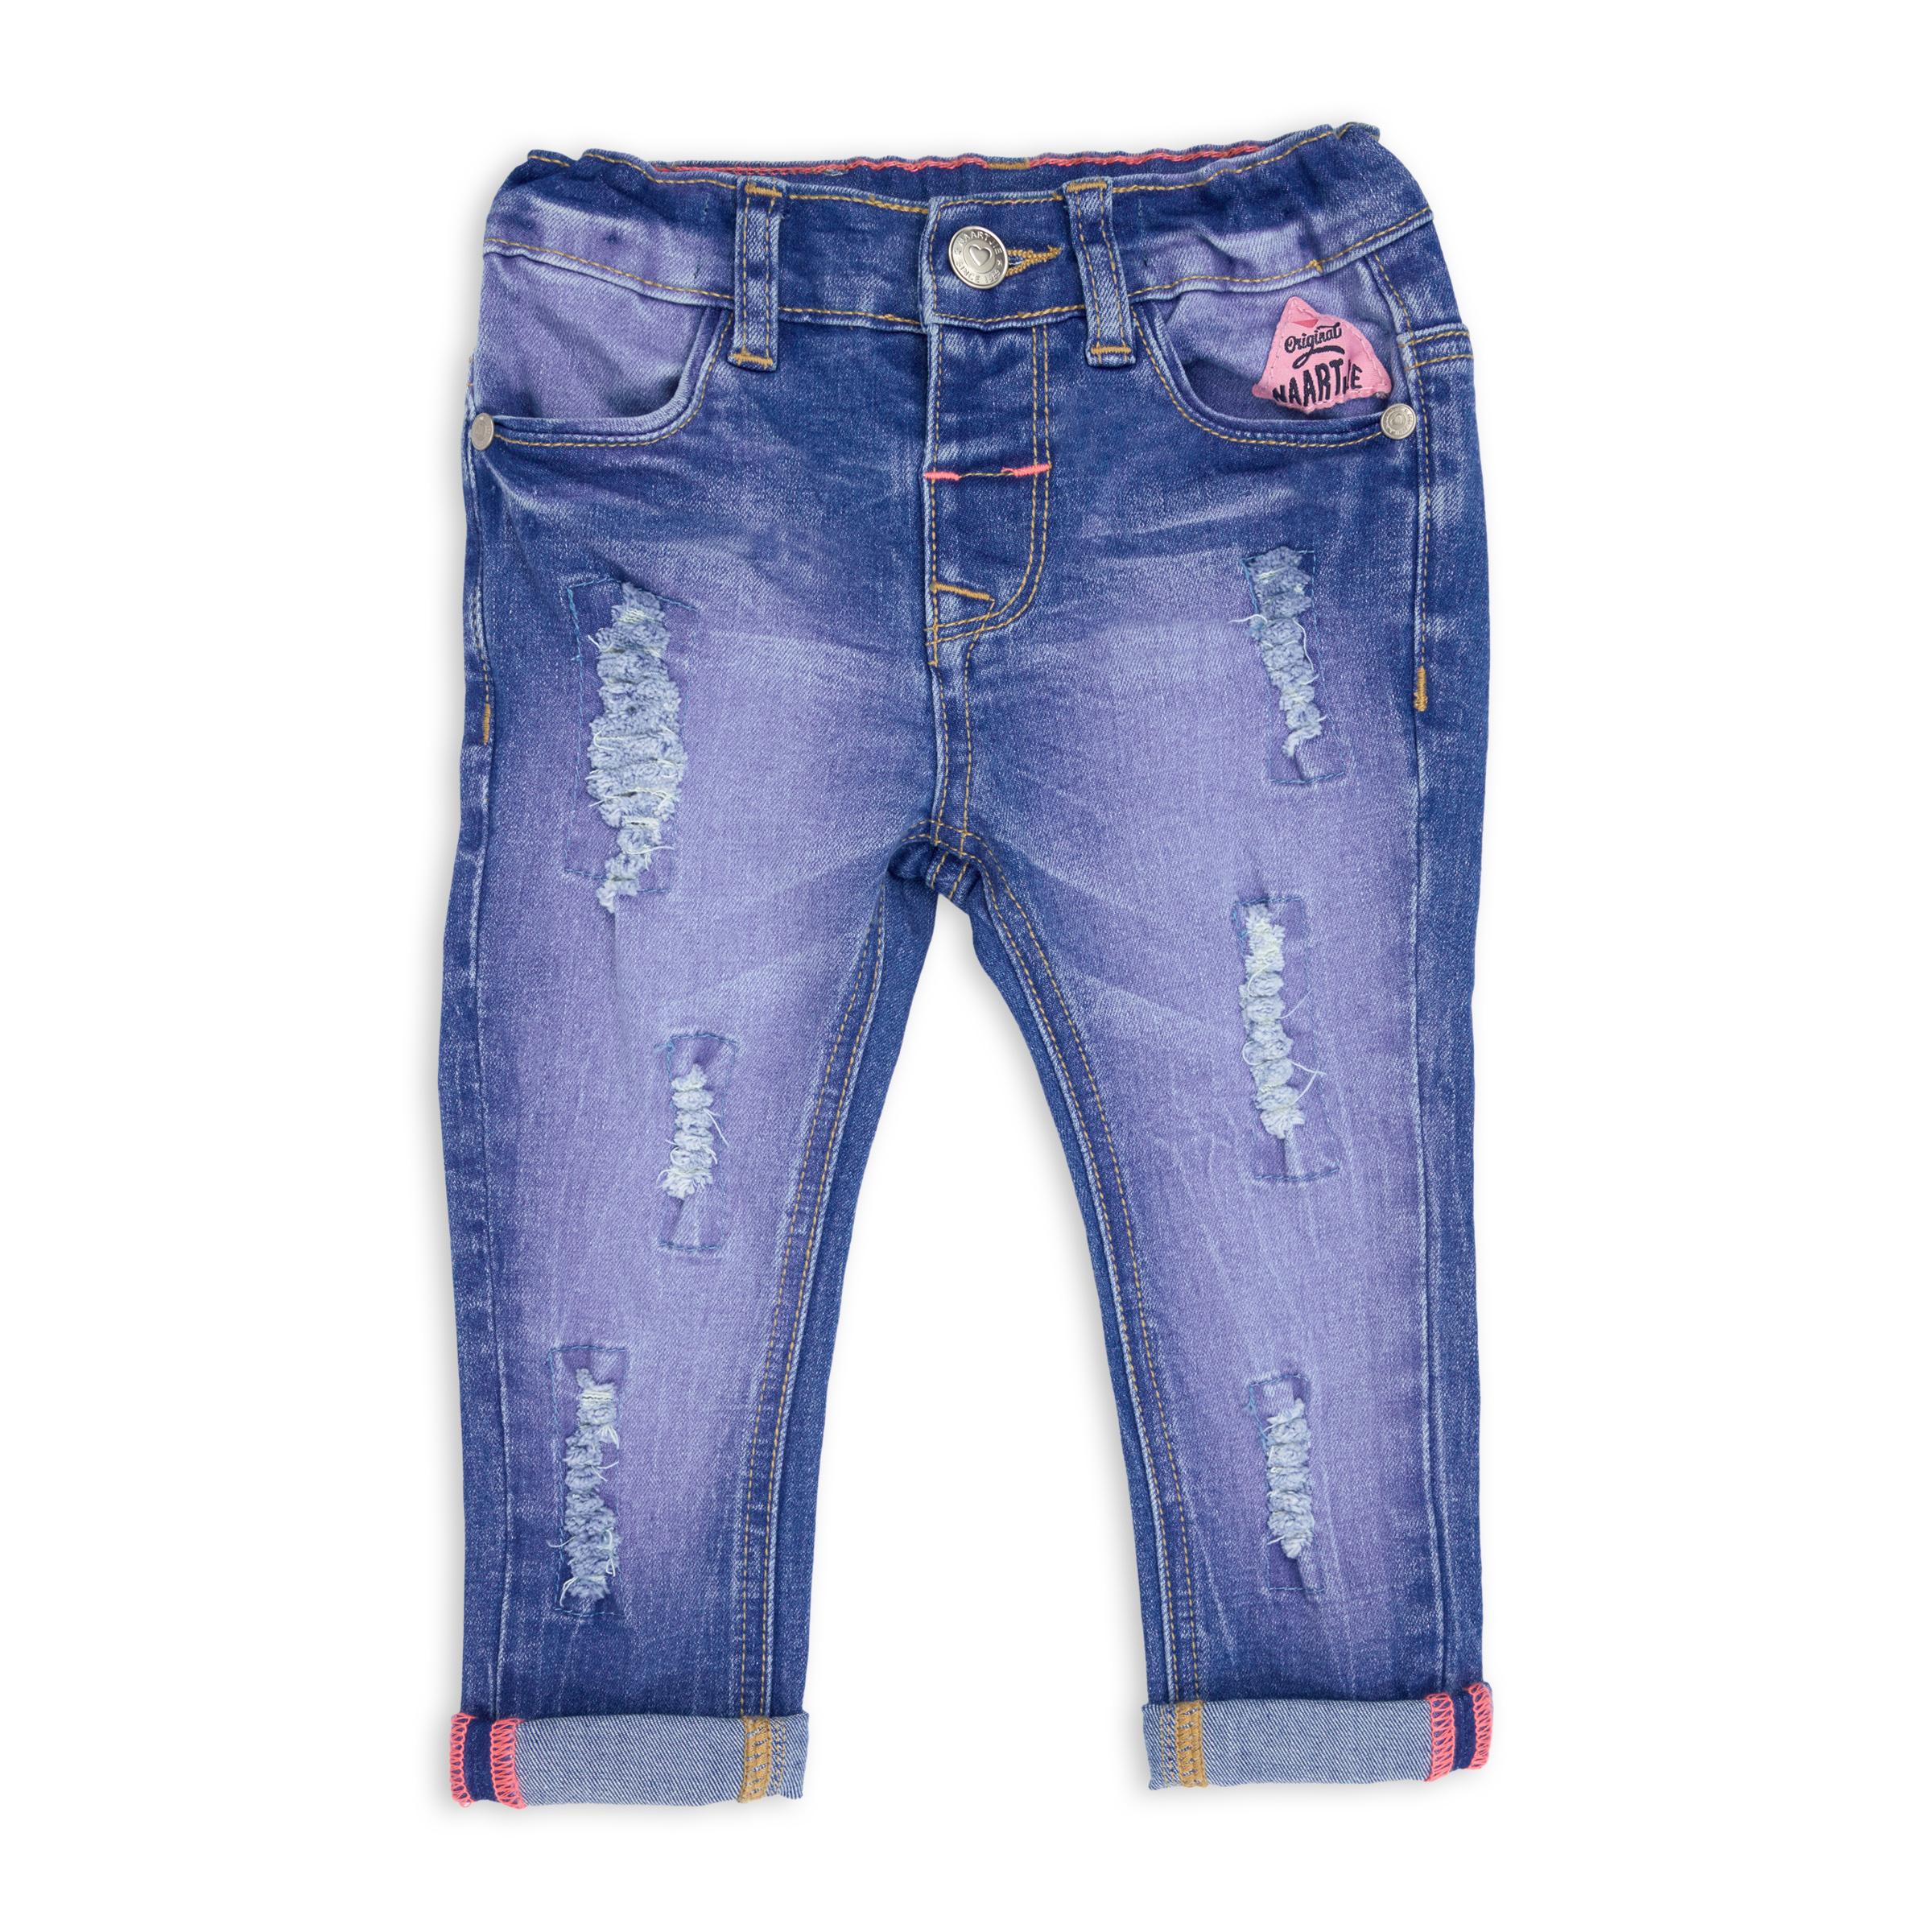 Branded jeans online shopping